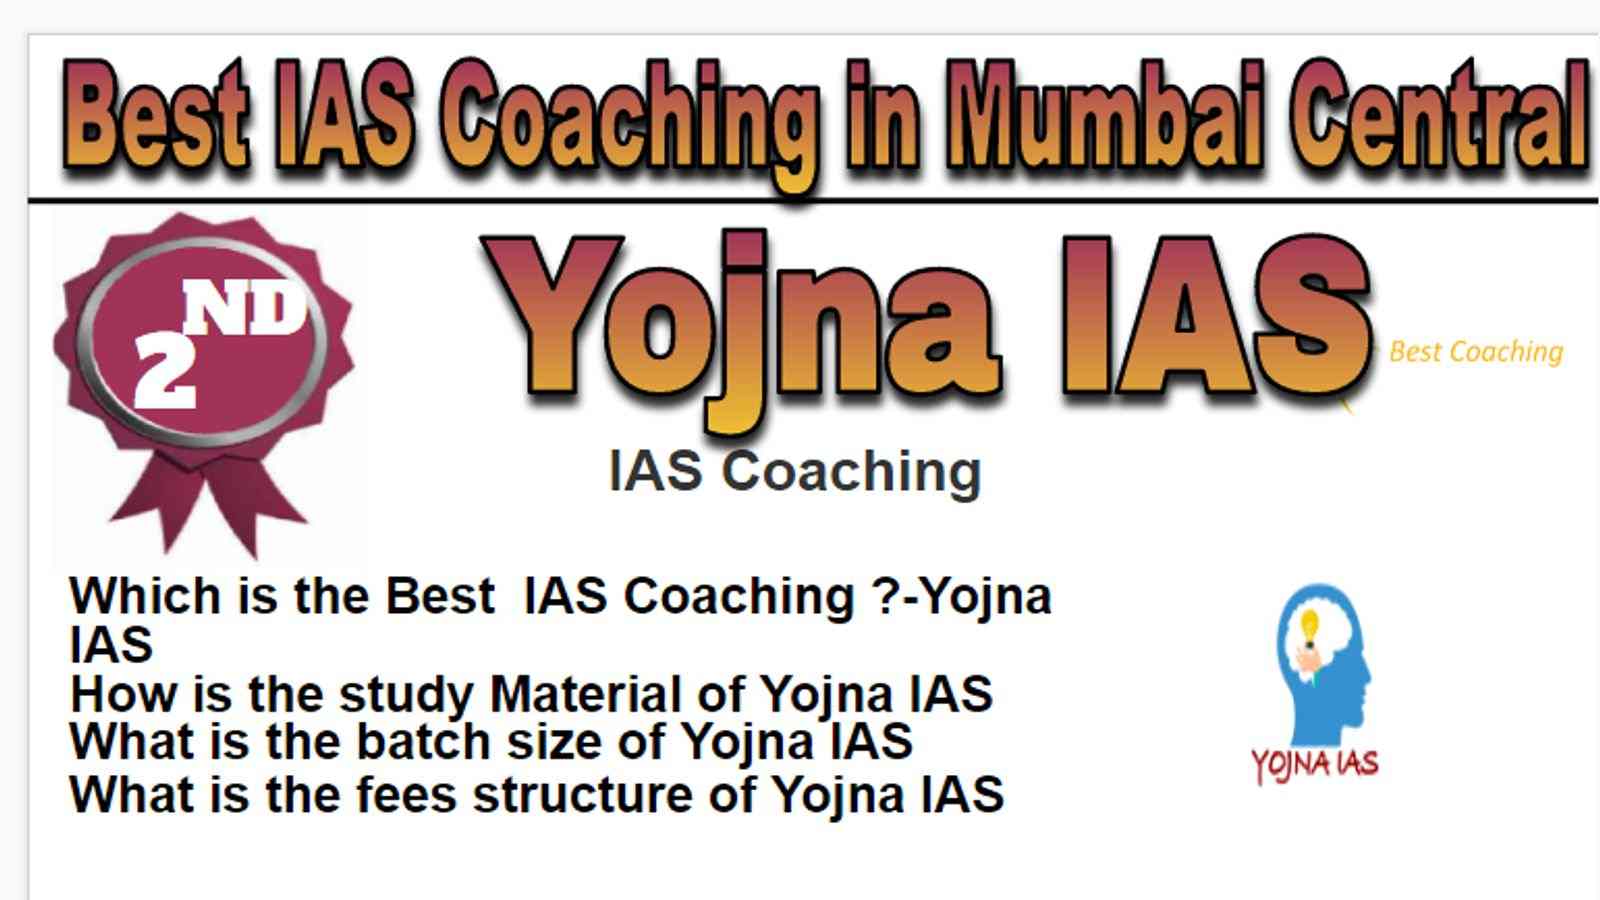 Rank 2 Best IAS Coaching in Mumbai Central